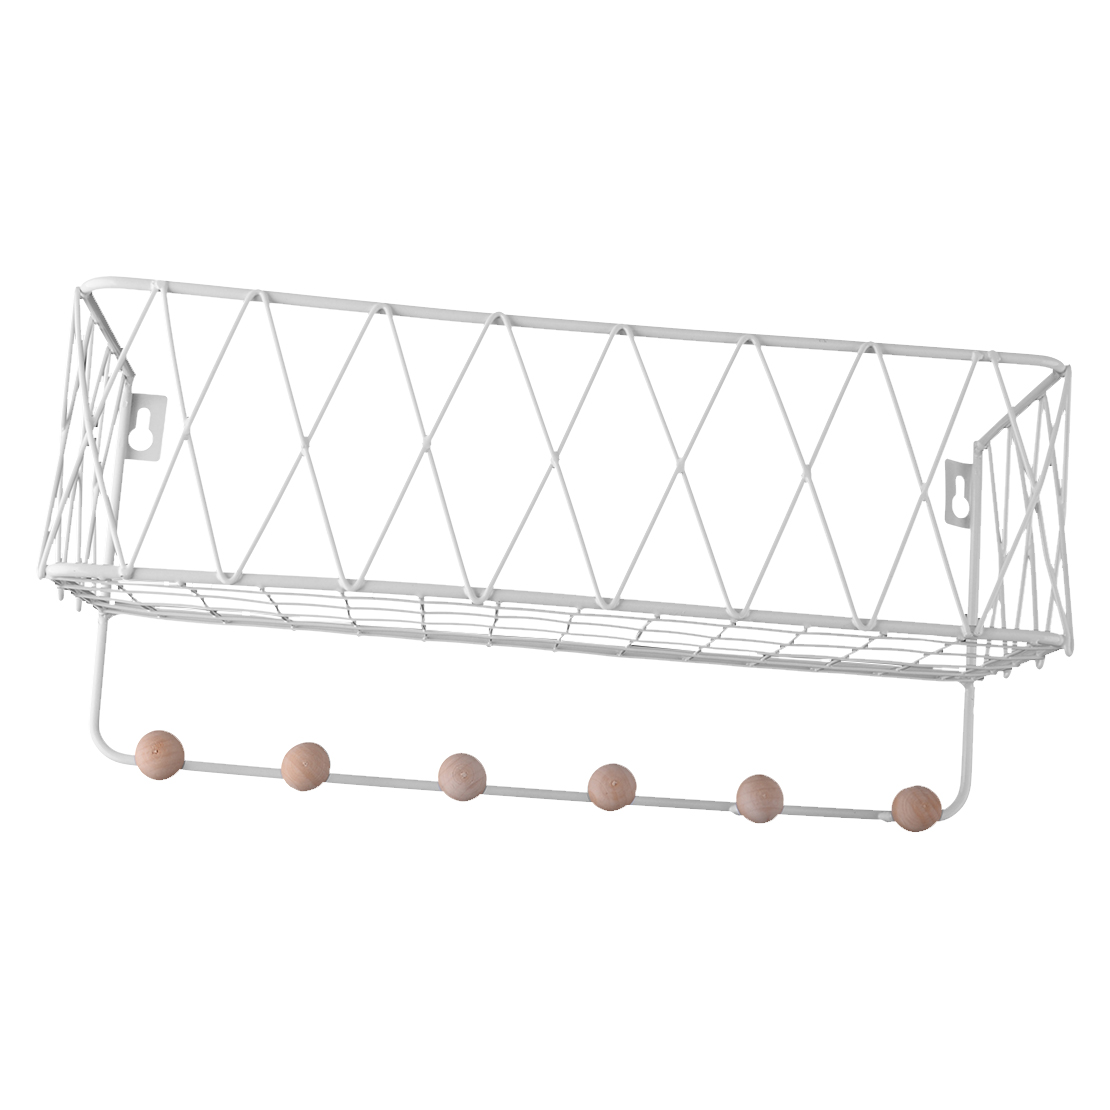 1x Wall Mounted Shelf Wire Rack Storage  Hooks Basket Hanging Key Hanger